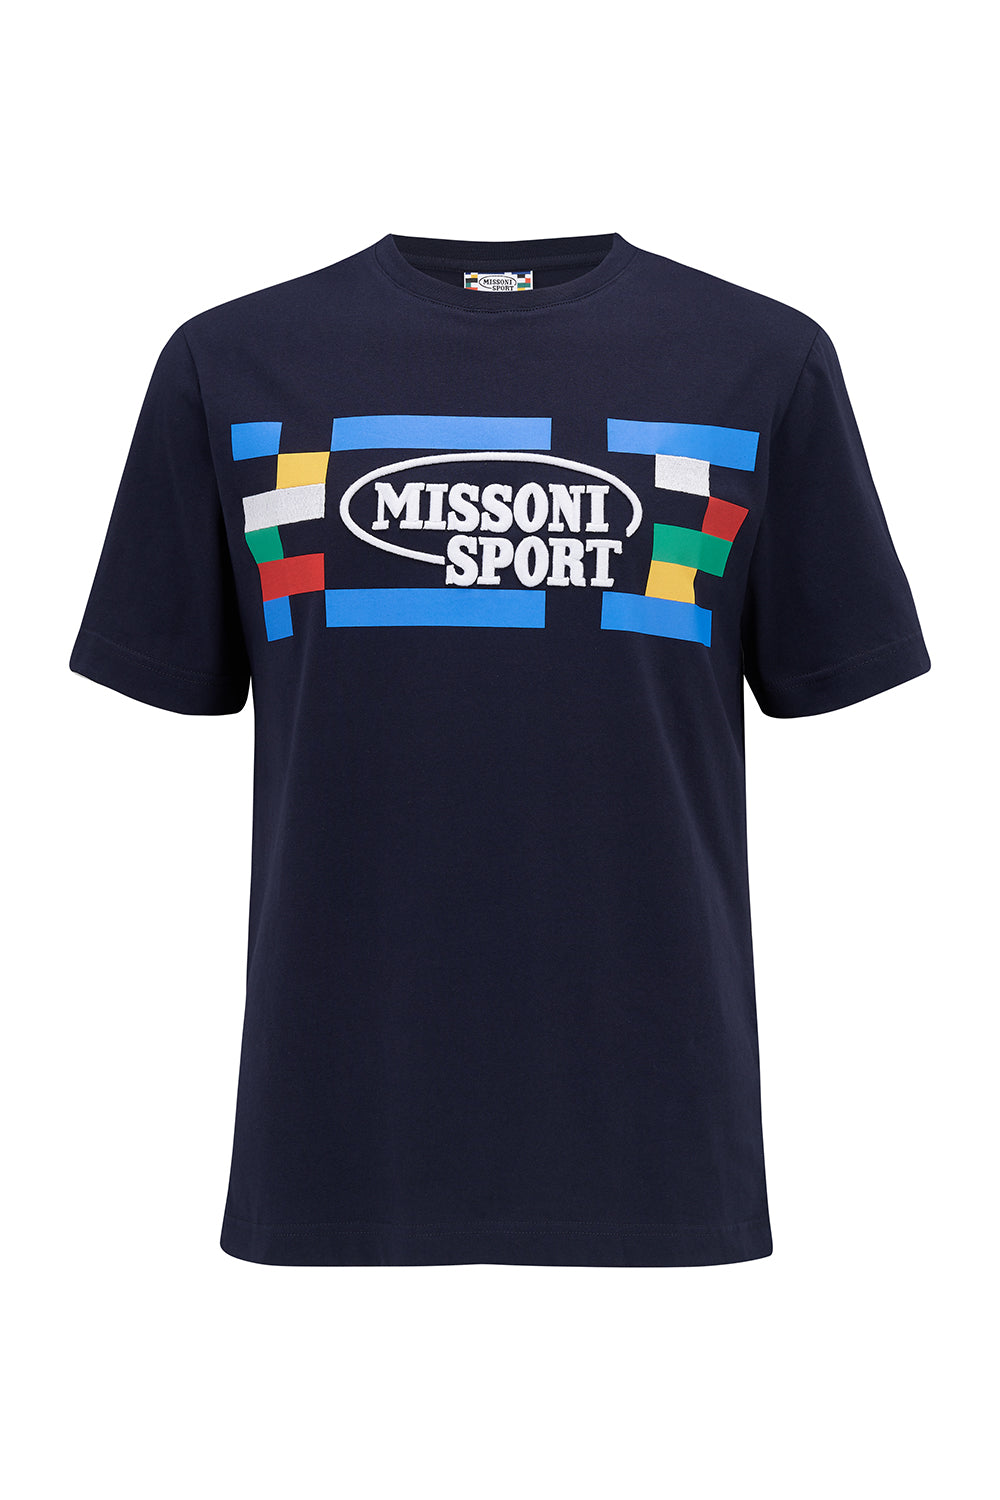 Missoni Men's Short-Sleeve Print T-shirt Navy - Front View